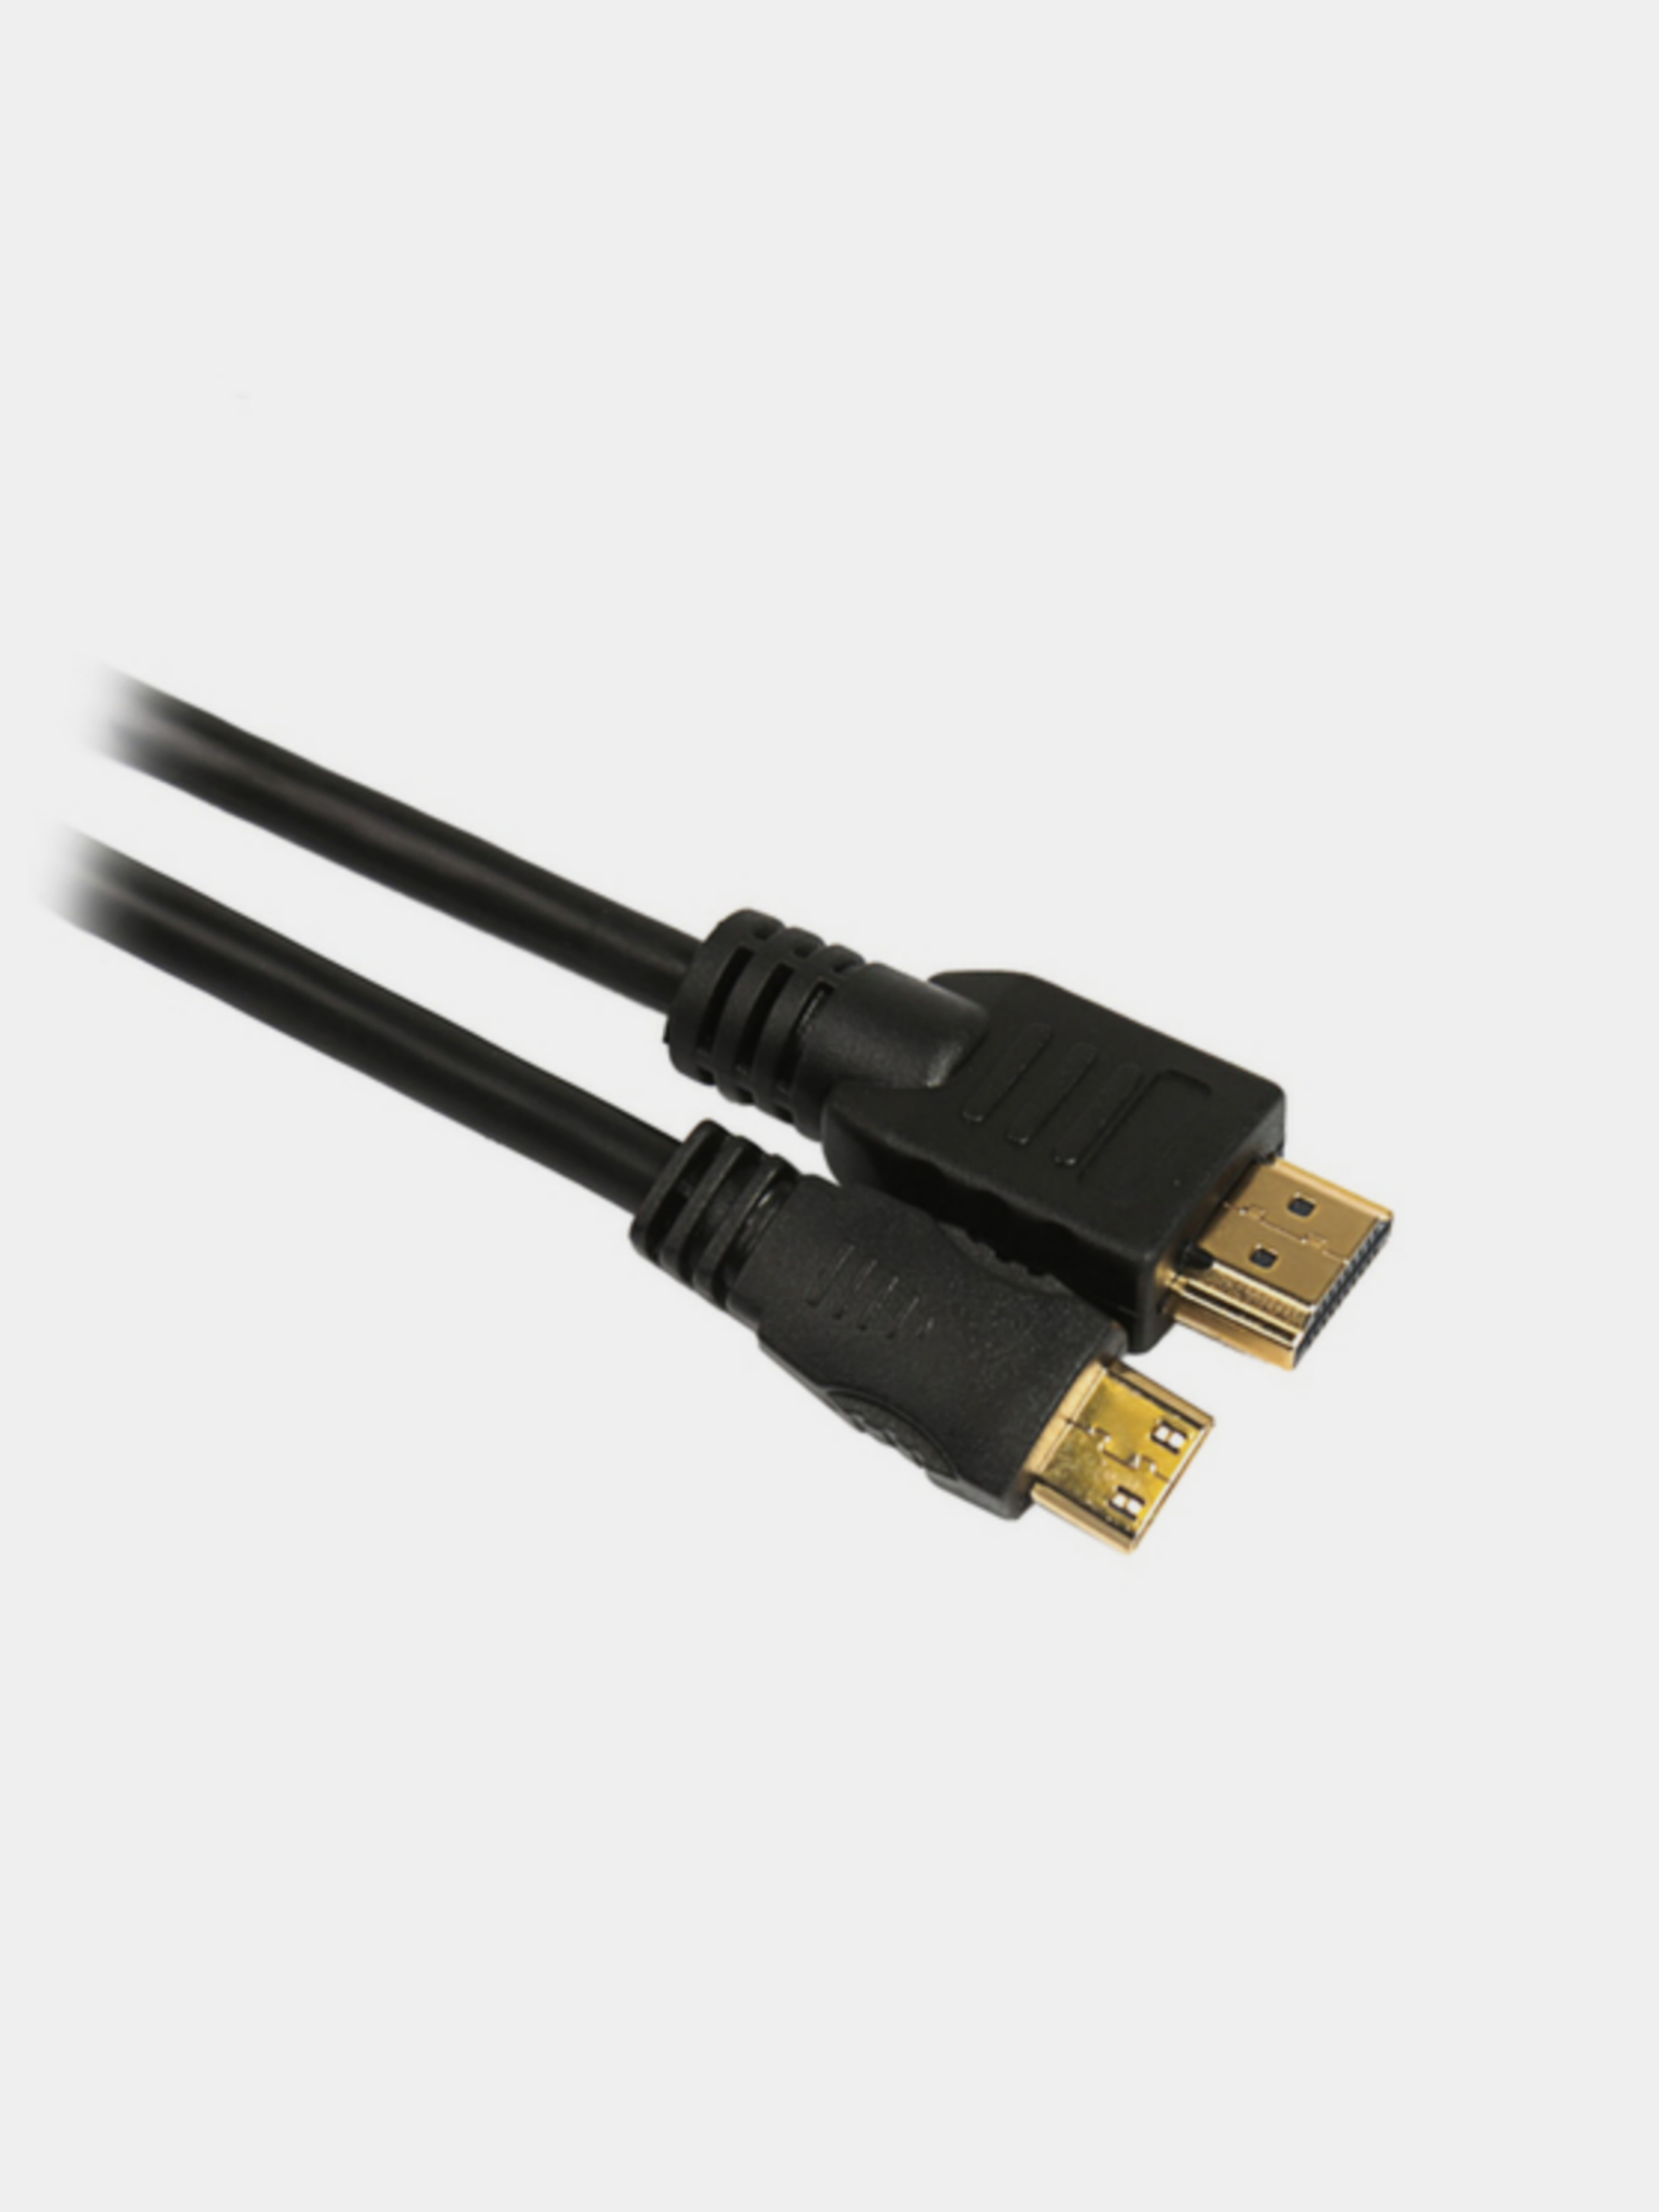  HDMI-mini HDMI 1.5м v2.0 за 370 ₽  в е .